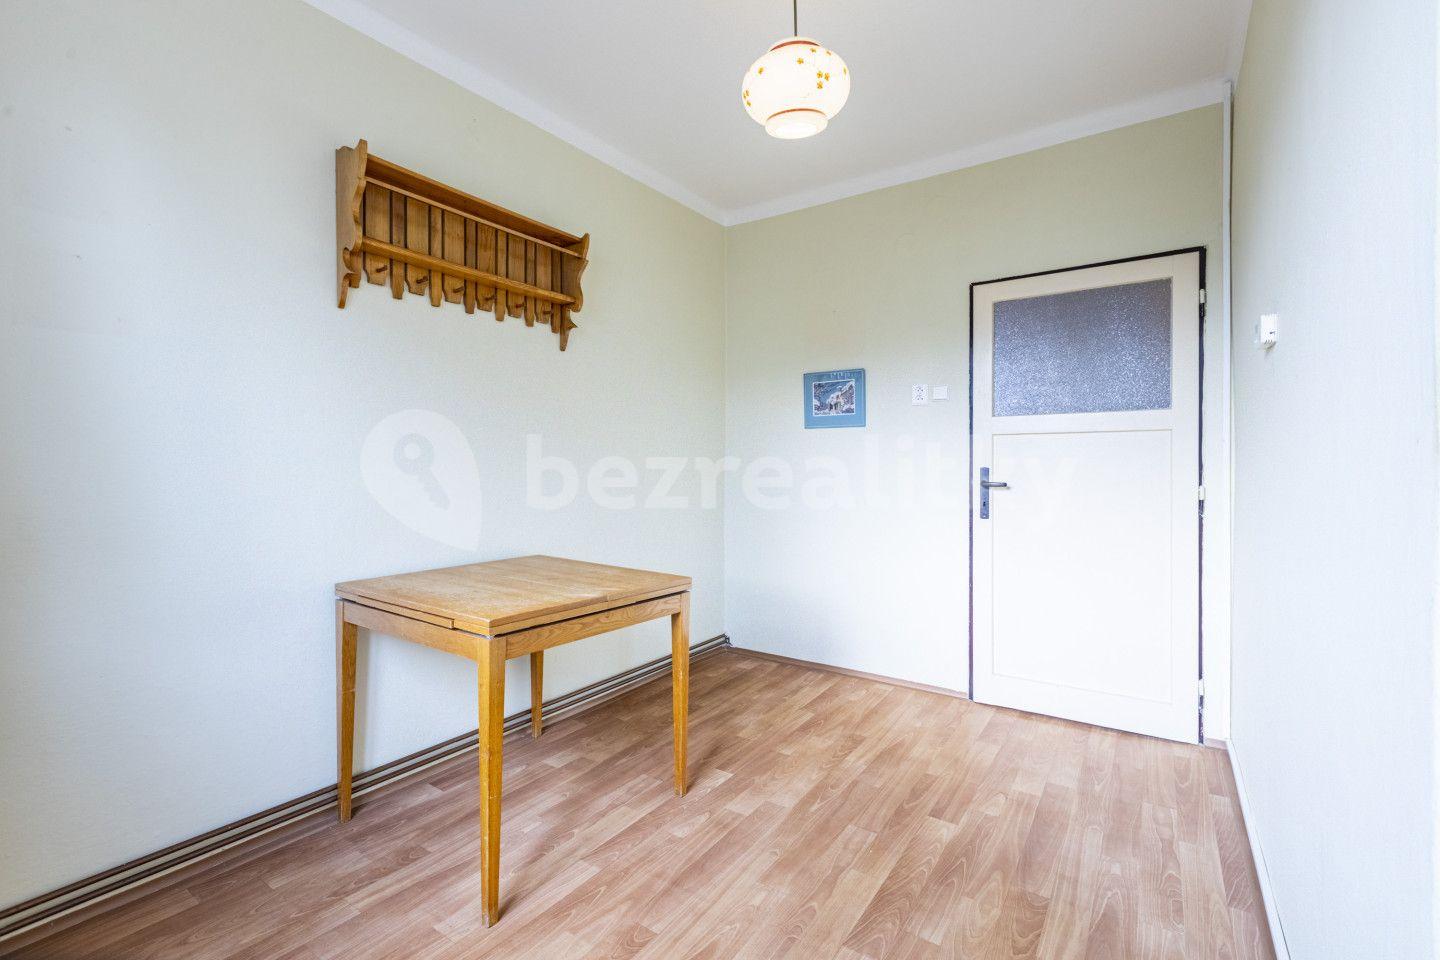 Predaj bytu 2-izbový 59 m², Slovenská, Jaroměř, Královéhradecký kraj